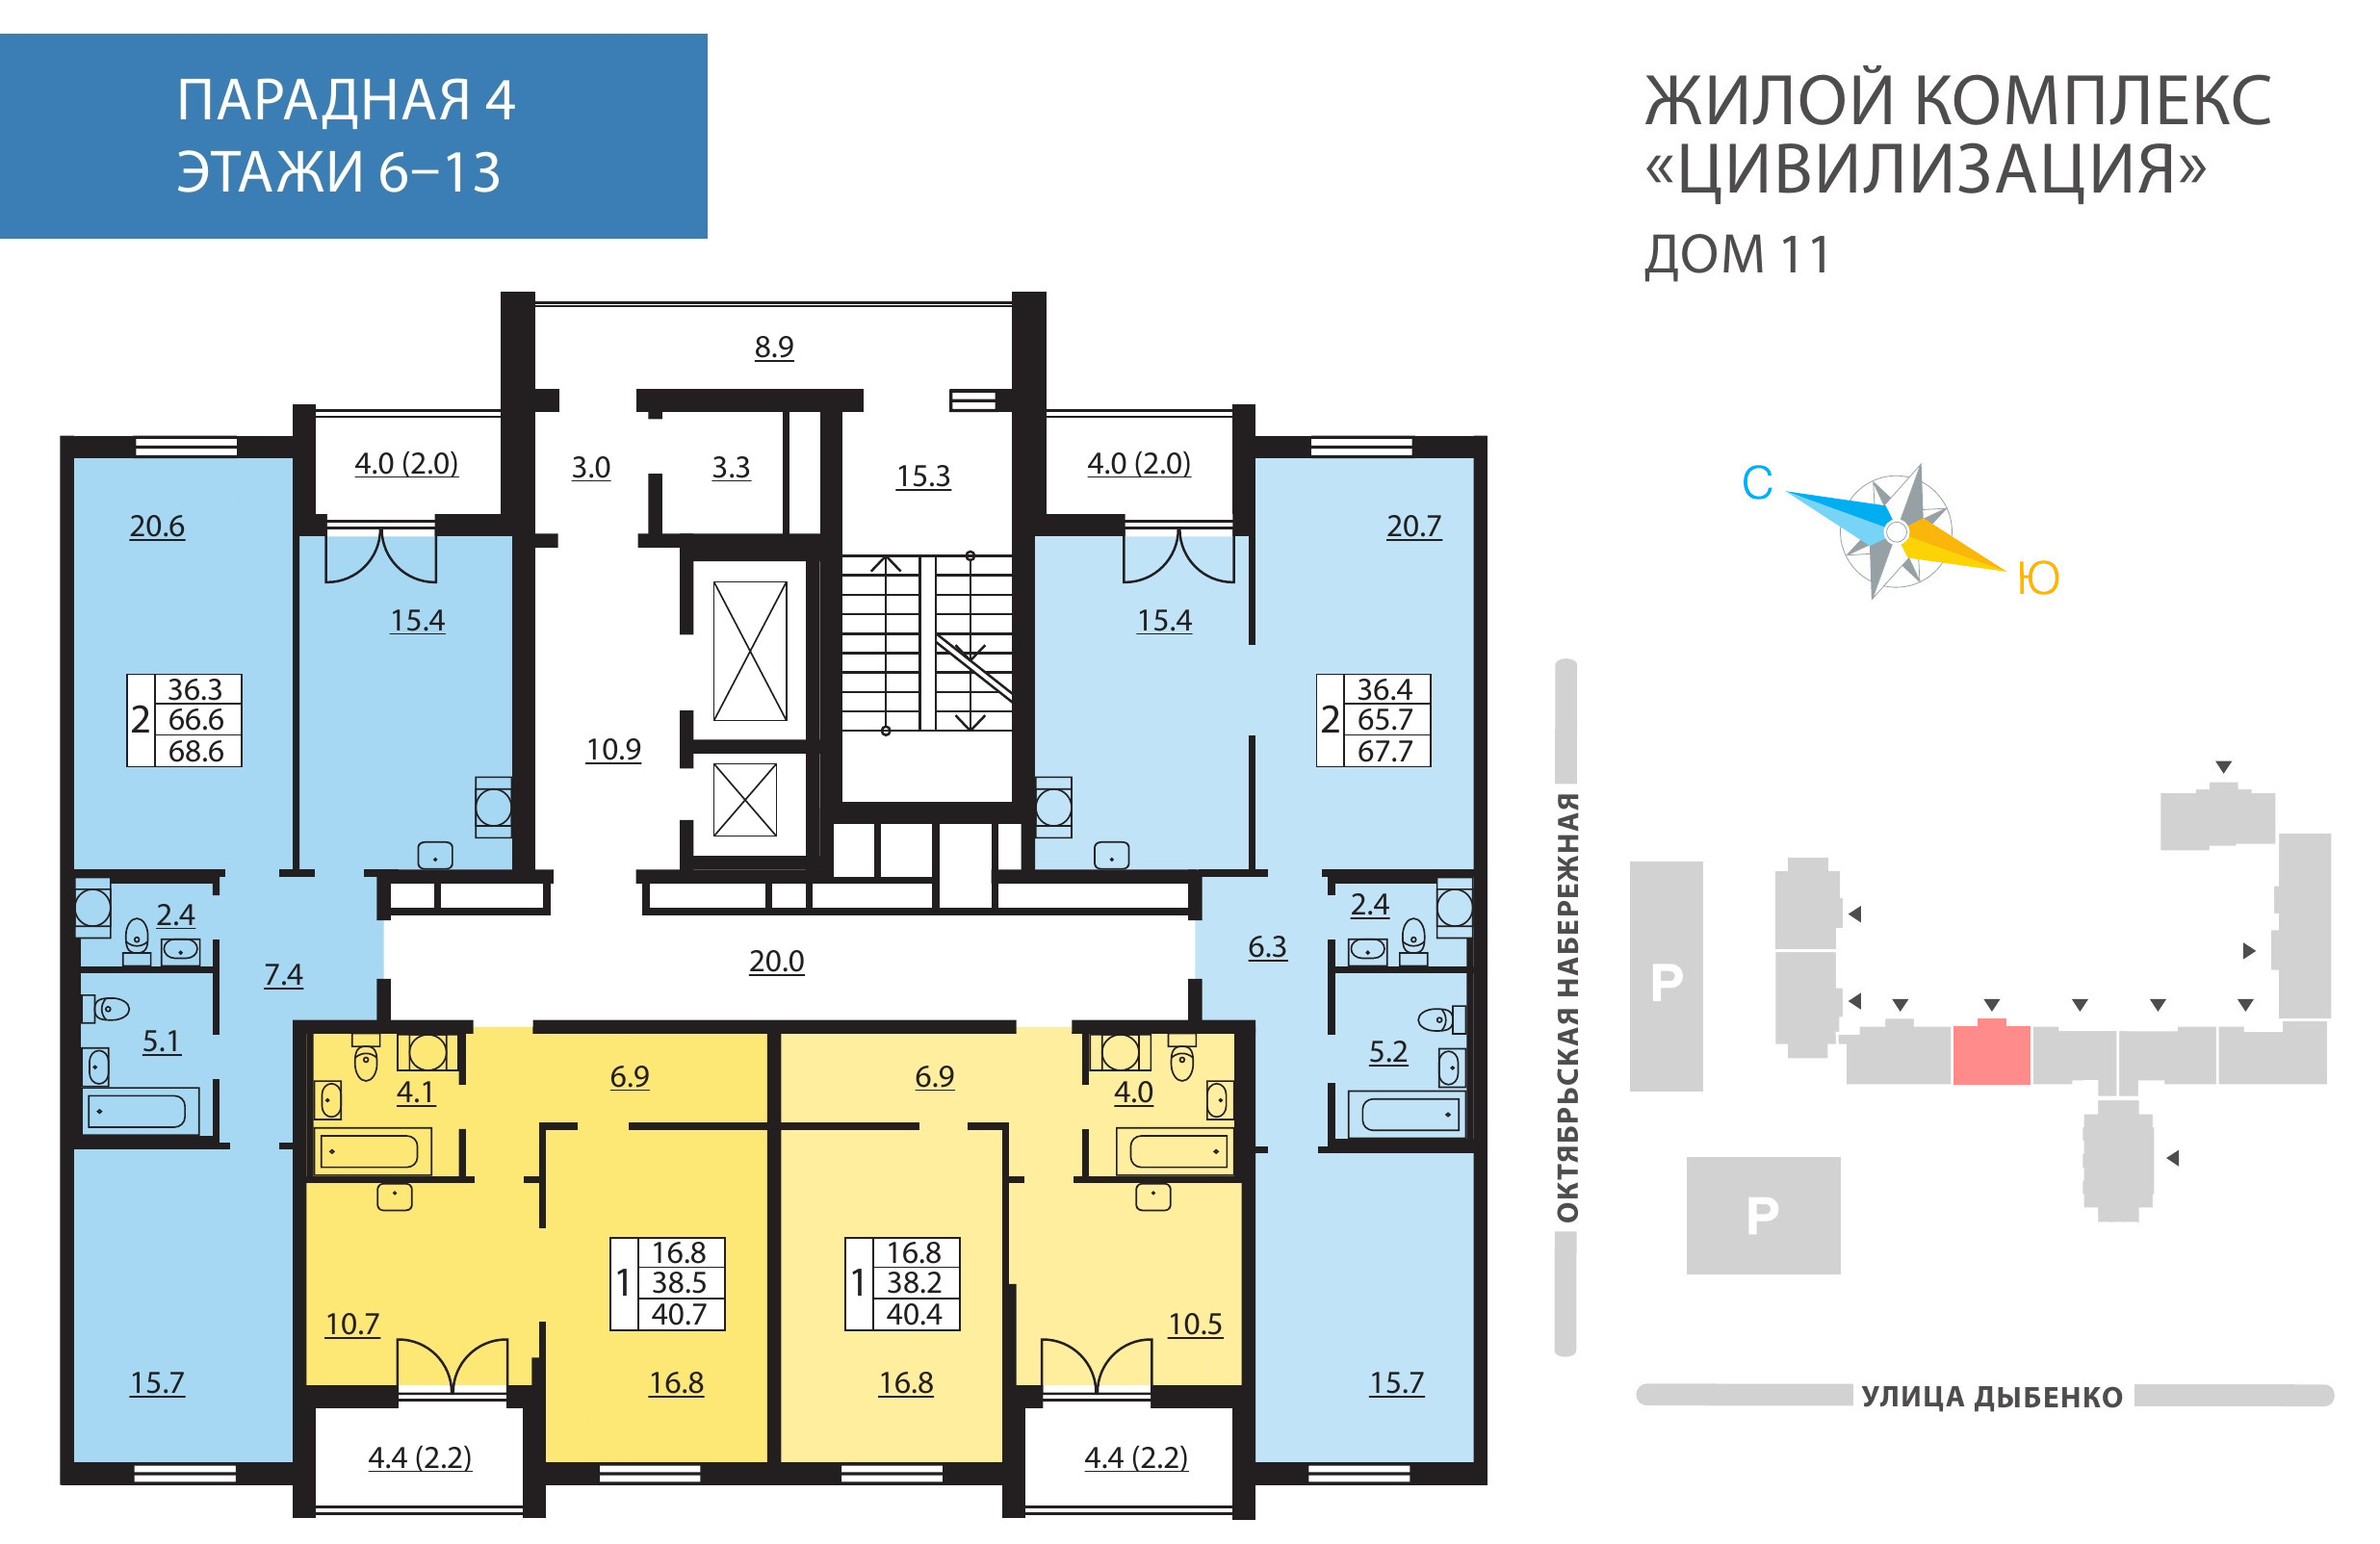 3-комнатная (Евро) квартира, 67.6 м² - планировка этажа